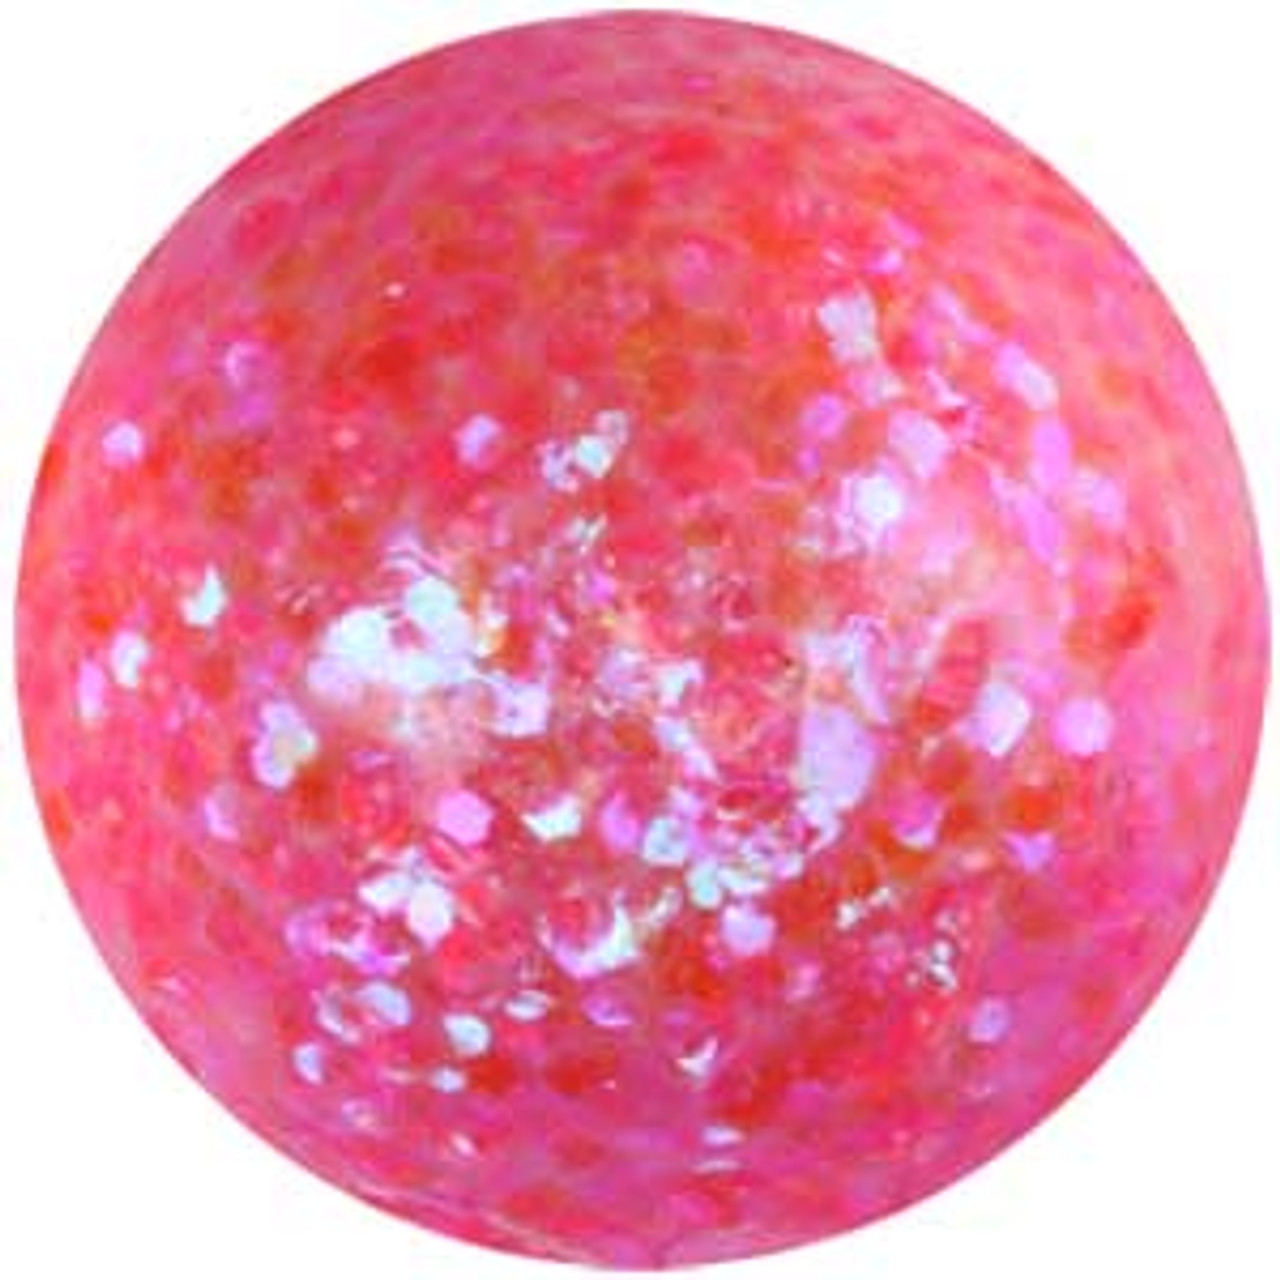 LE Light Elegance Dry Glitter Sweet Pink Crystals - 4gms